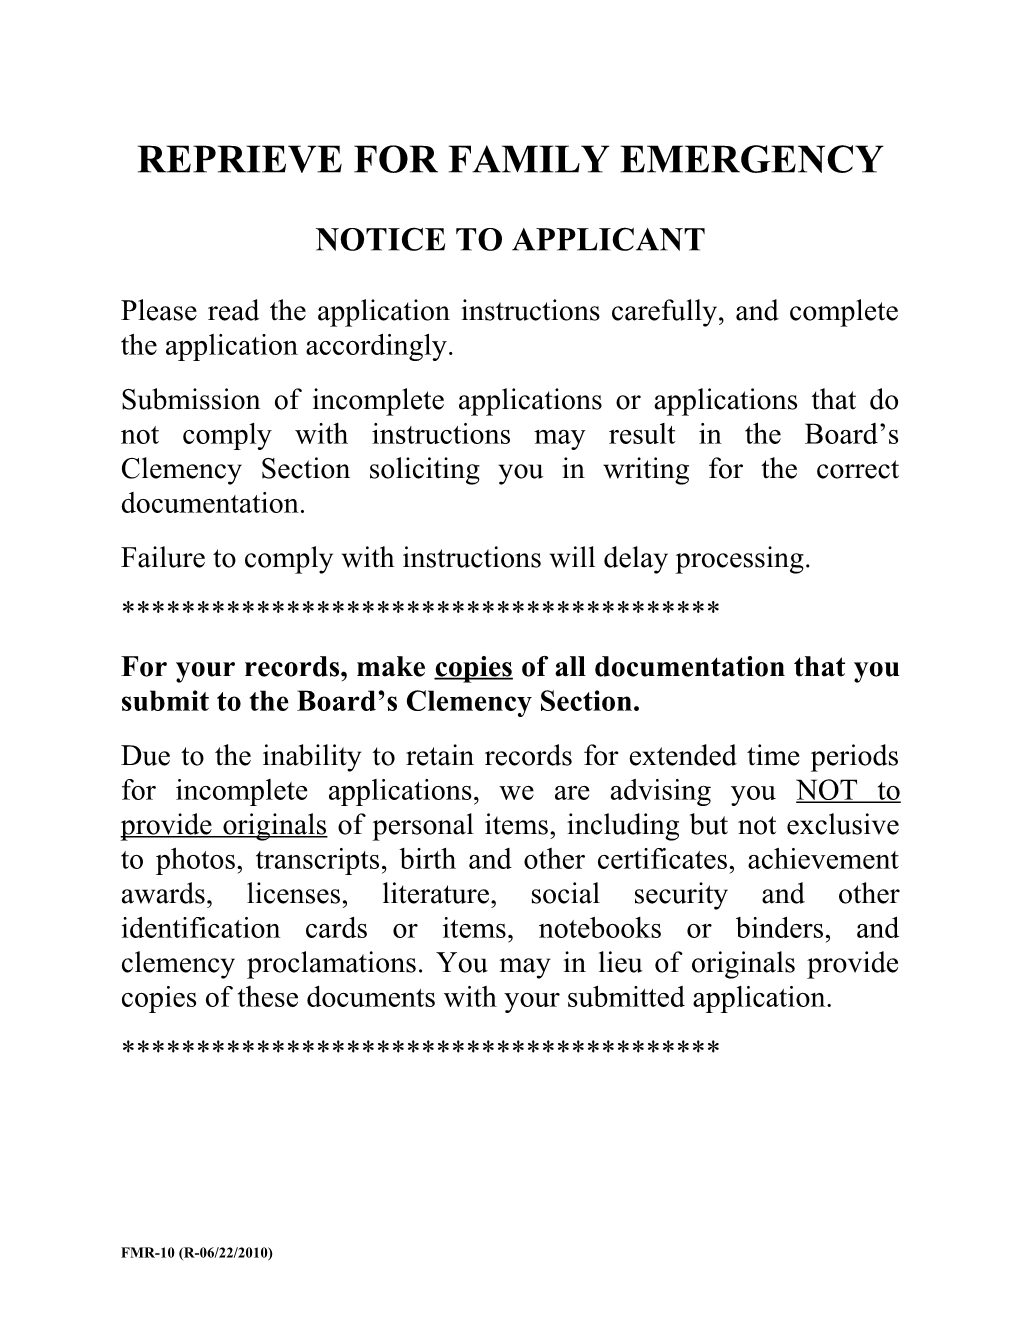 Reprieve for Family Emergency